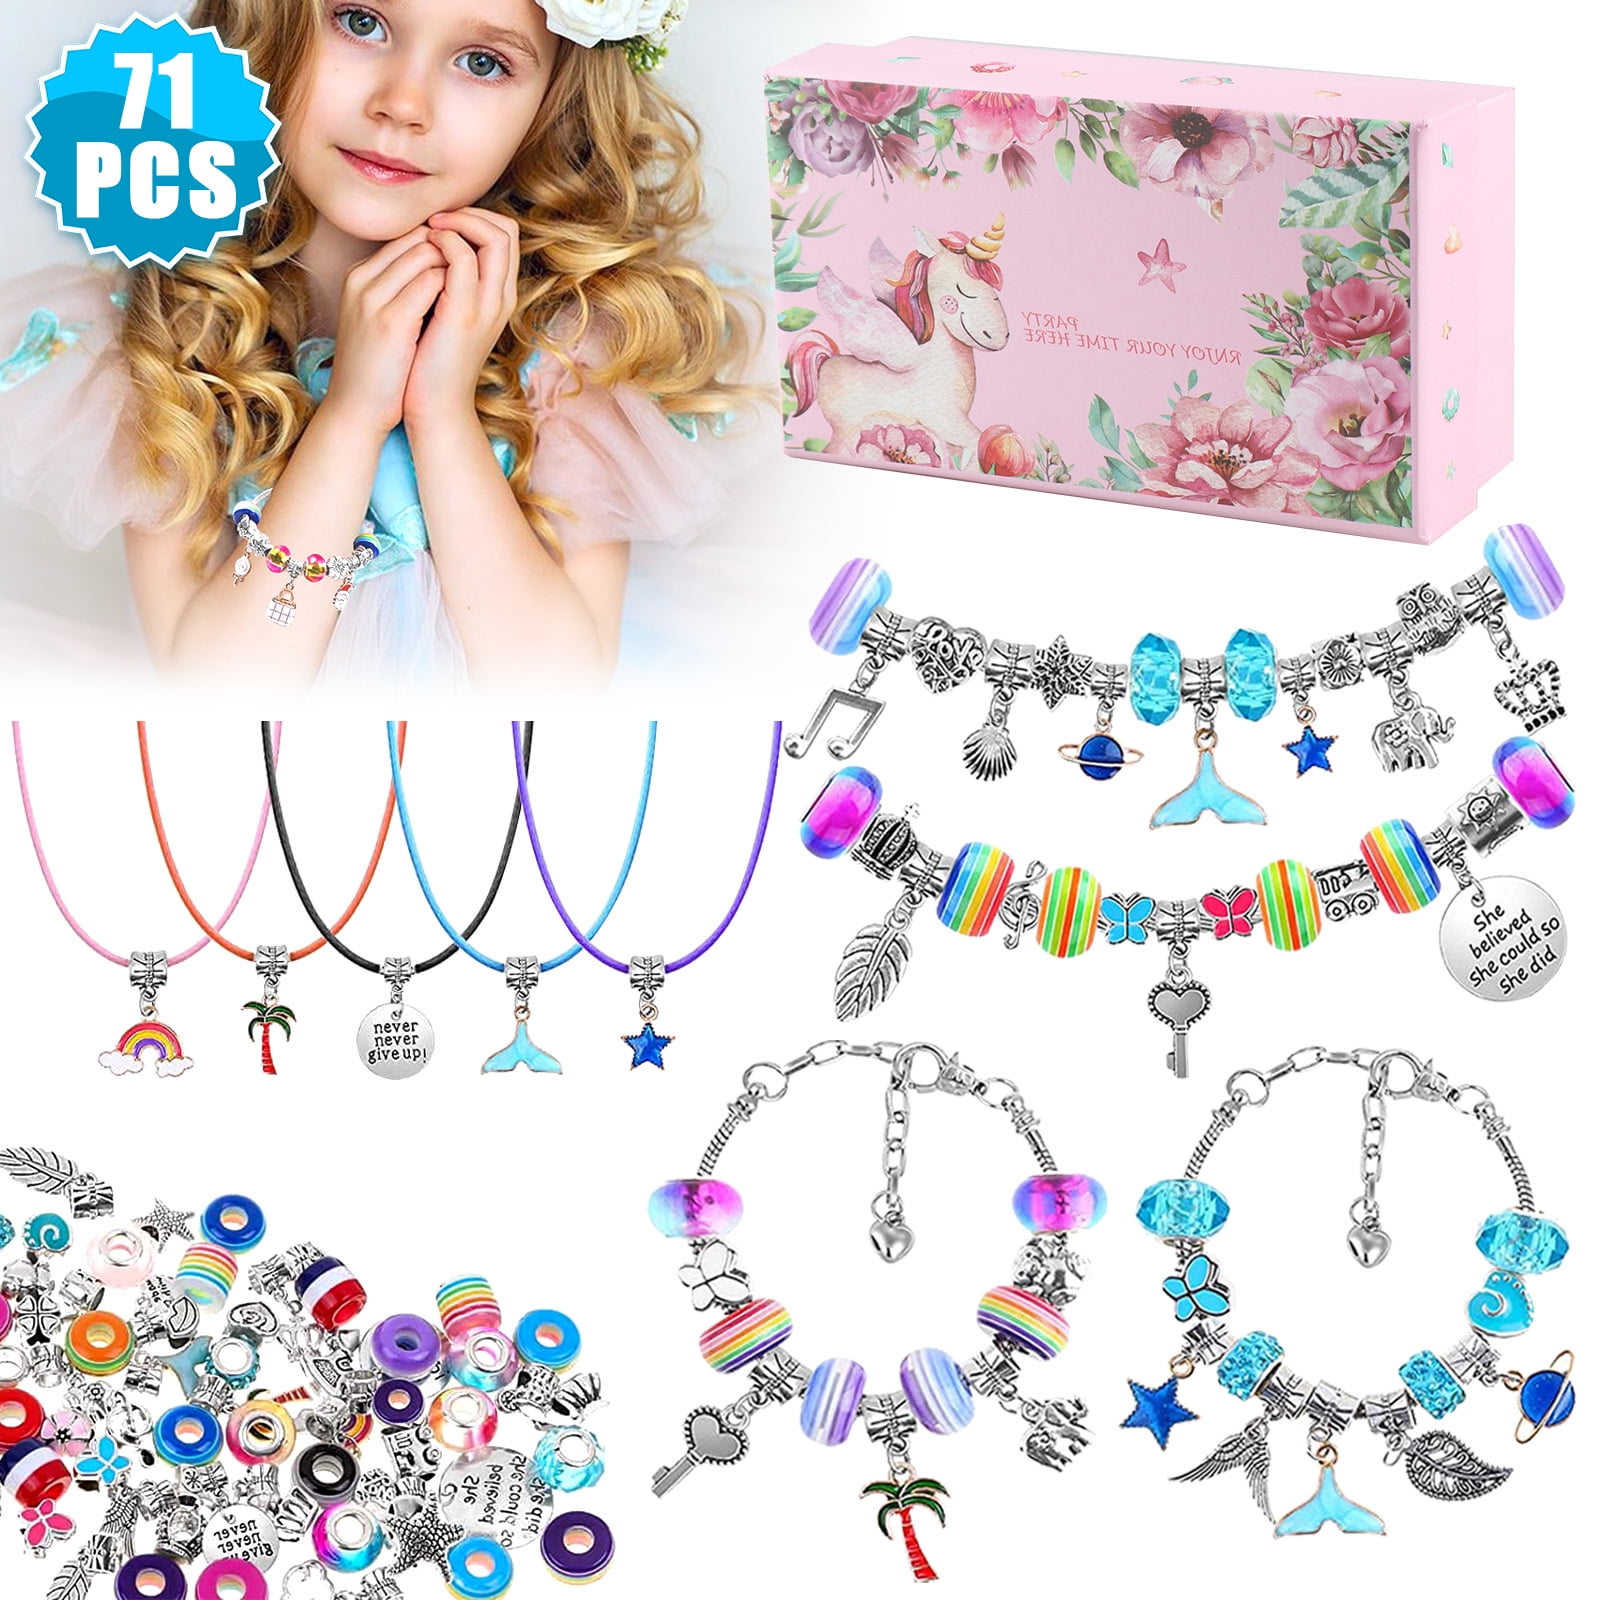 klmars Charm Bracelet Making Kit,Jewelry Making Supplies  Beads,Unicorn/Mermaid Crafts Gifts Set for Girls Teens Age 5-12